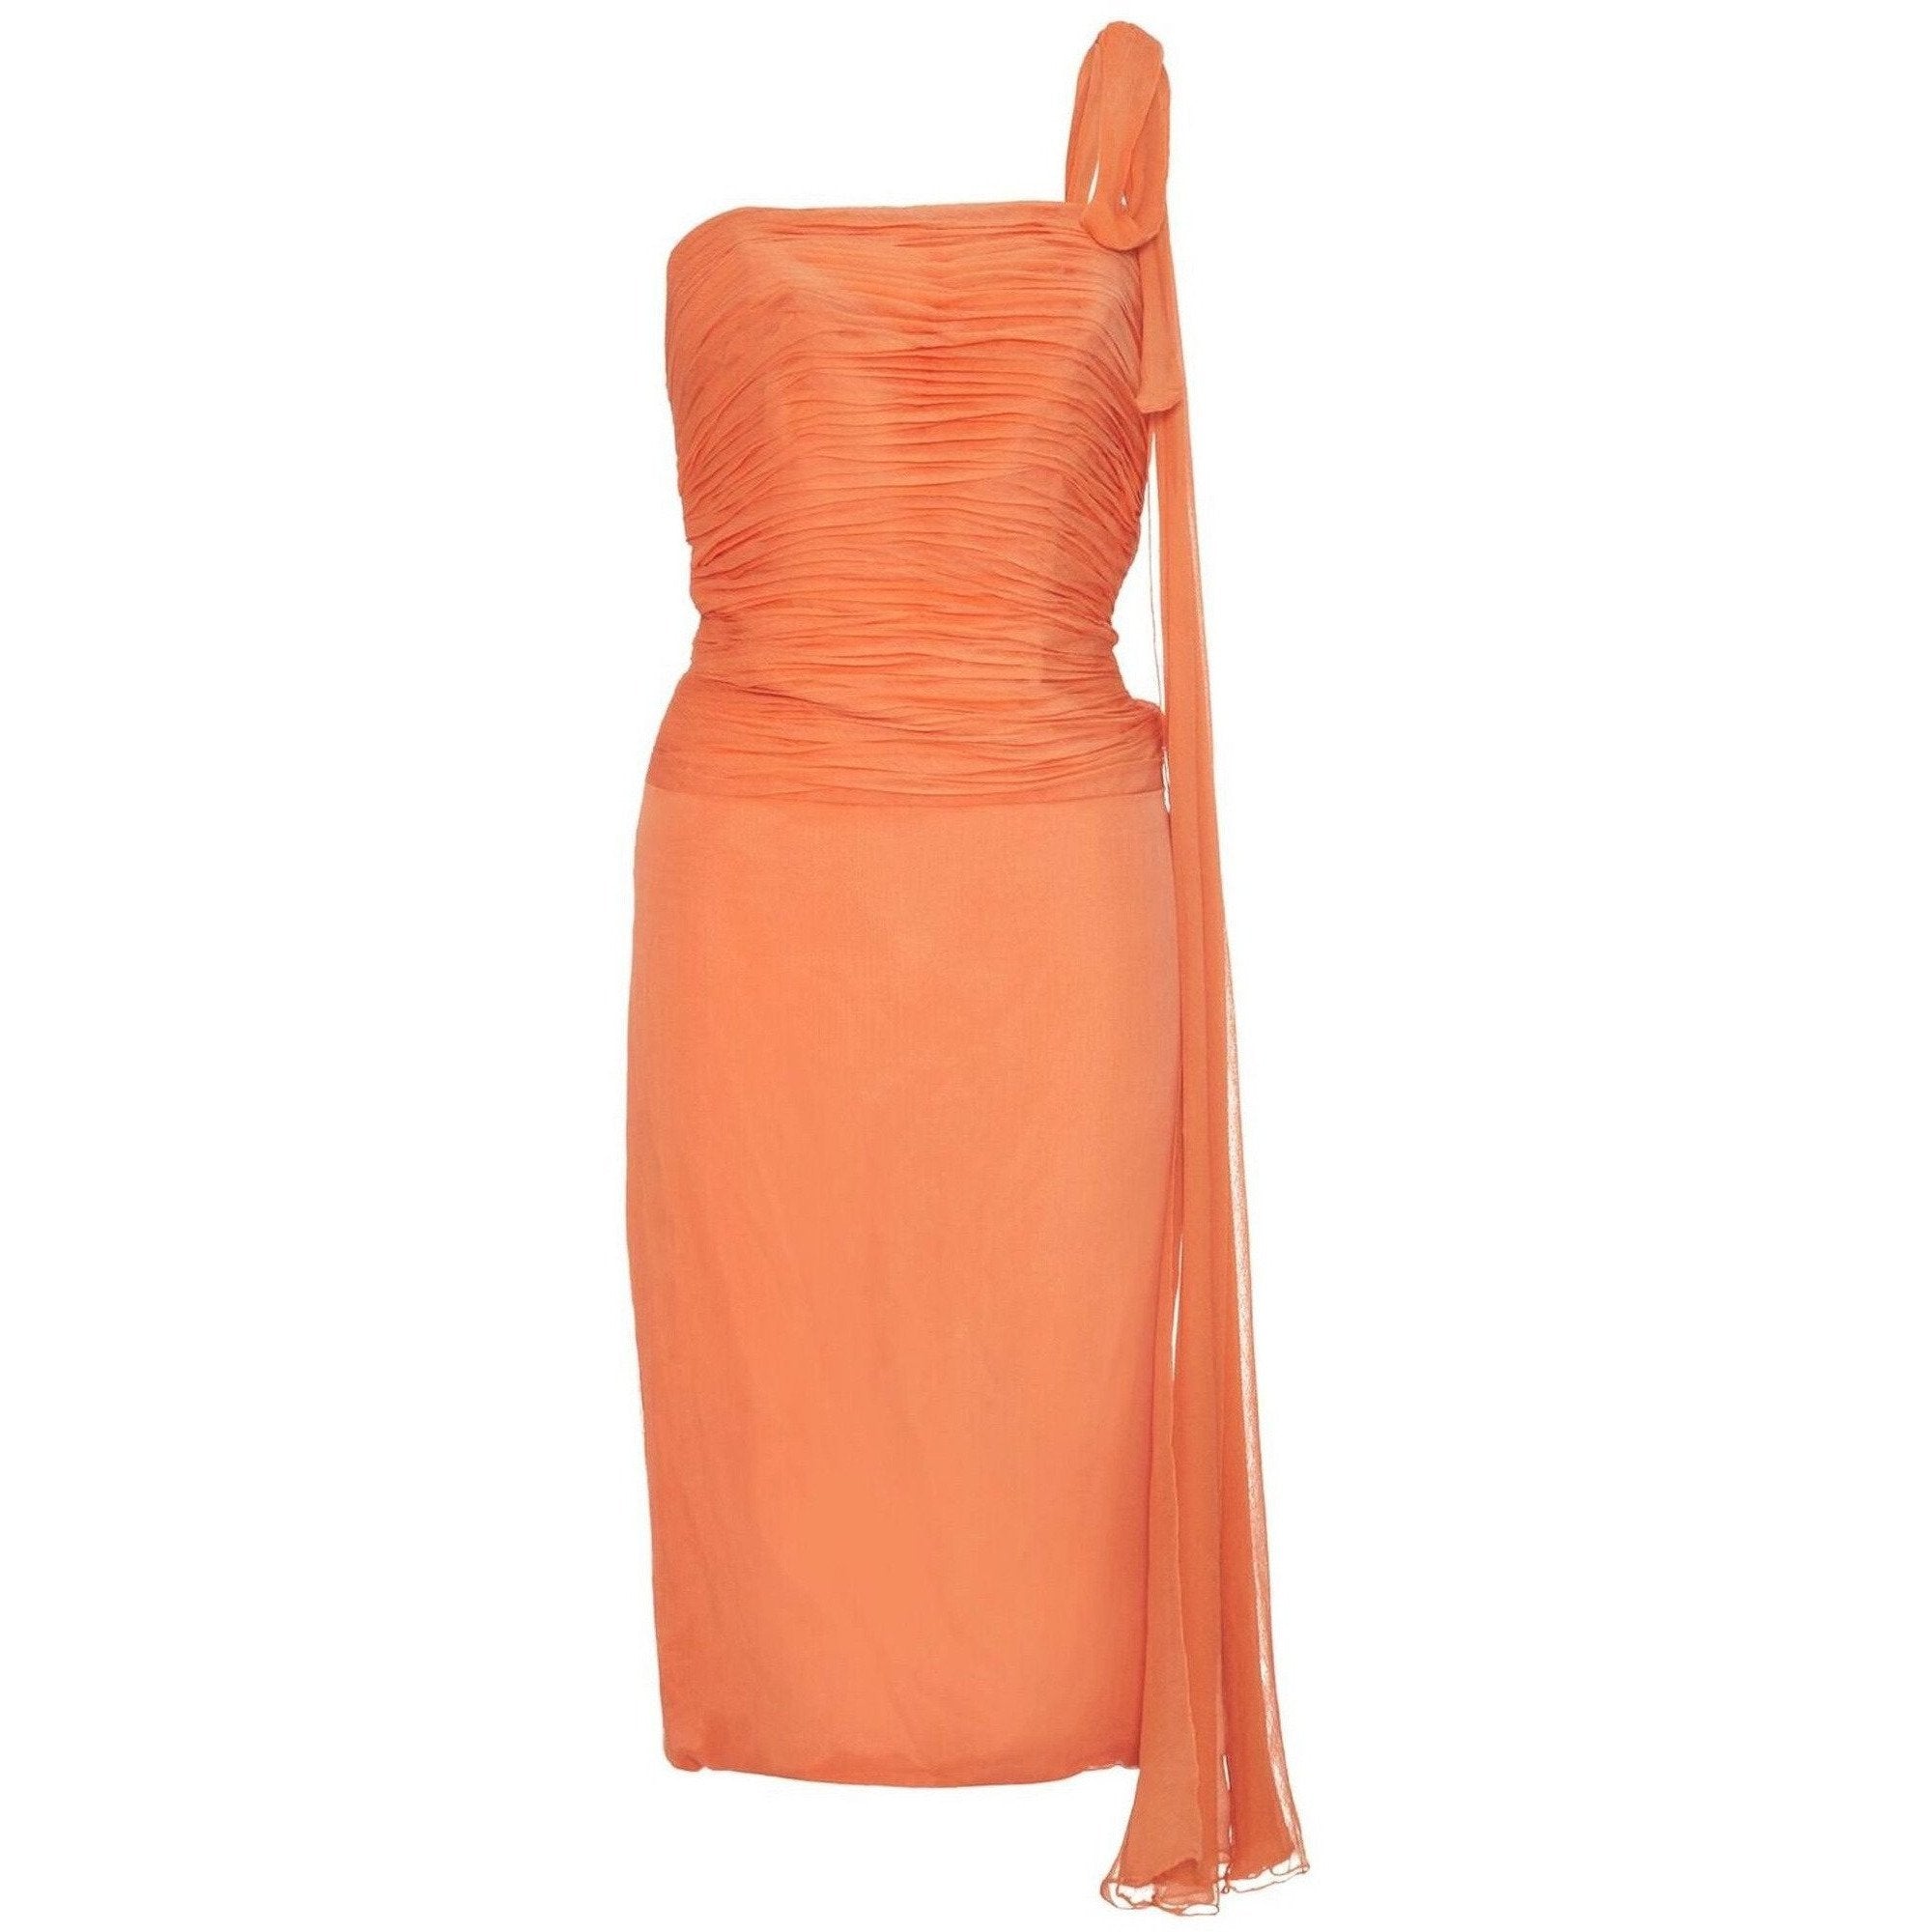 1950s-60s Harrods Orange Silk Georgette Dress With Asymmetrical Strap